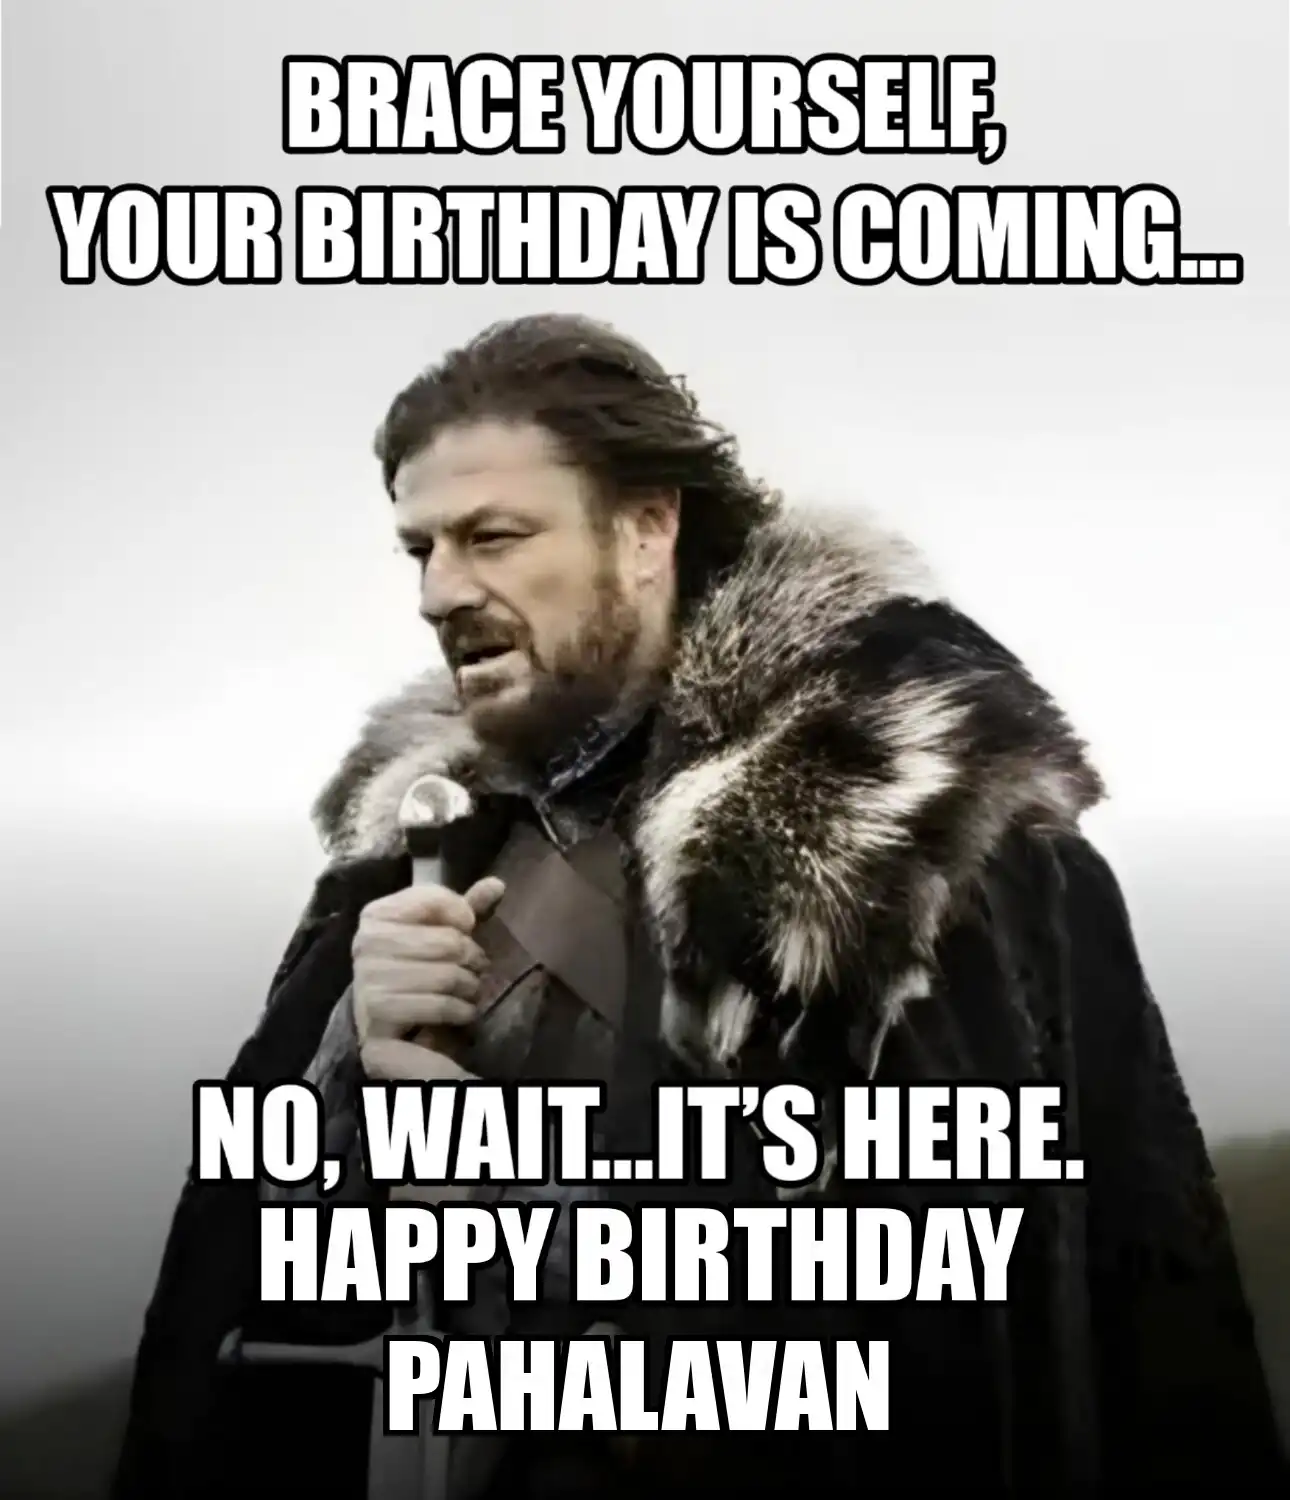 Happy Birthday Pahalavan Brace Yourself Your Birthday Is Coming Meme